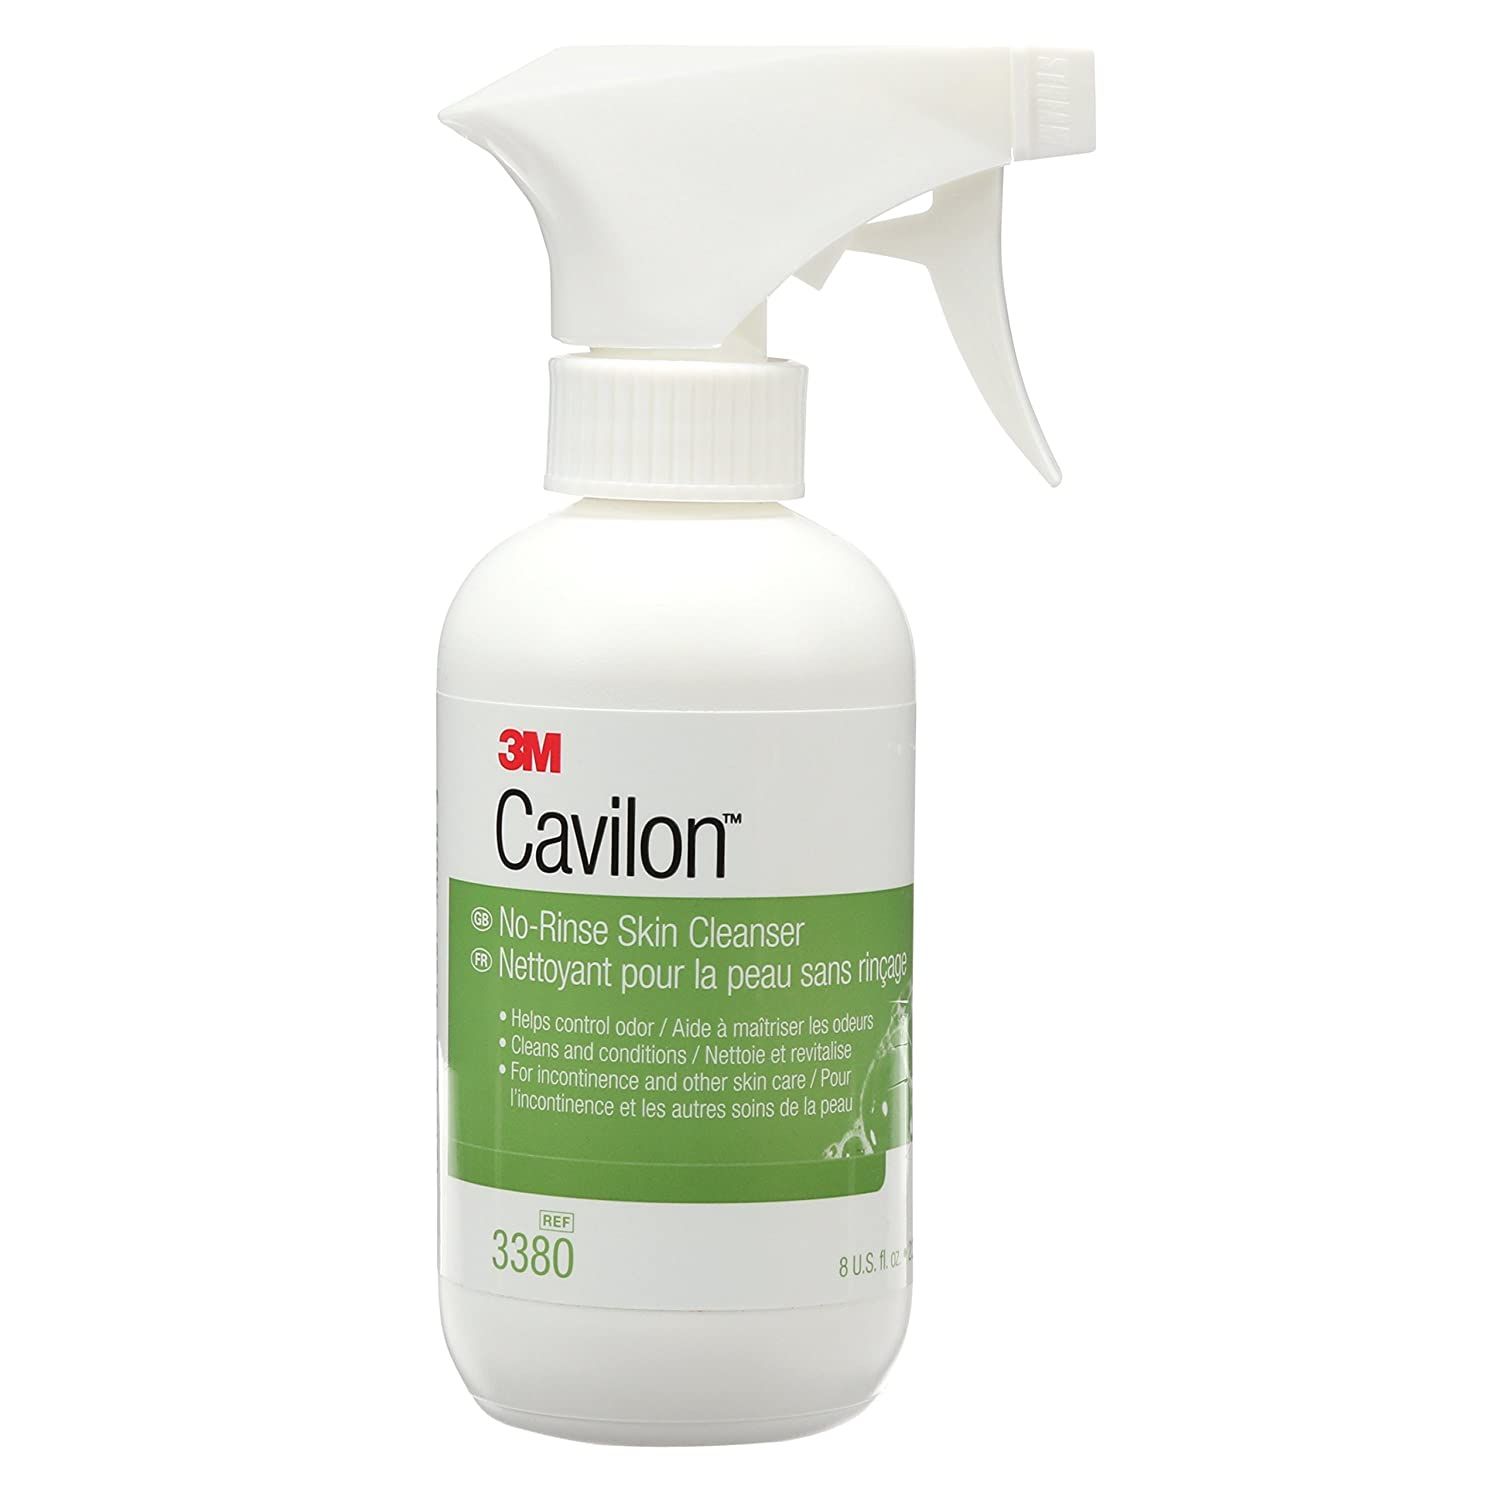 DISCCavilon No-Rinse Skin Cleanser Spray - 8 fl oz